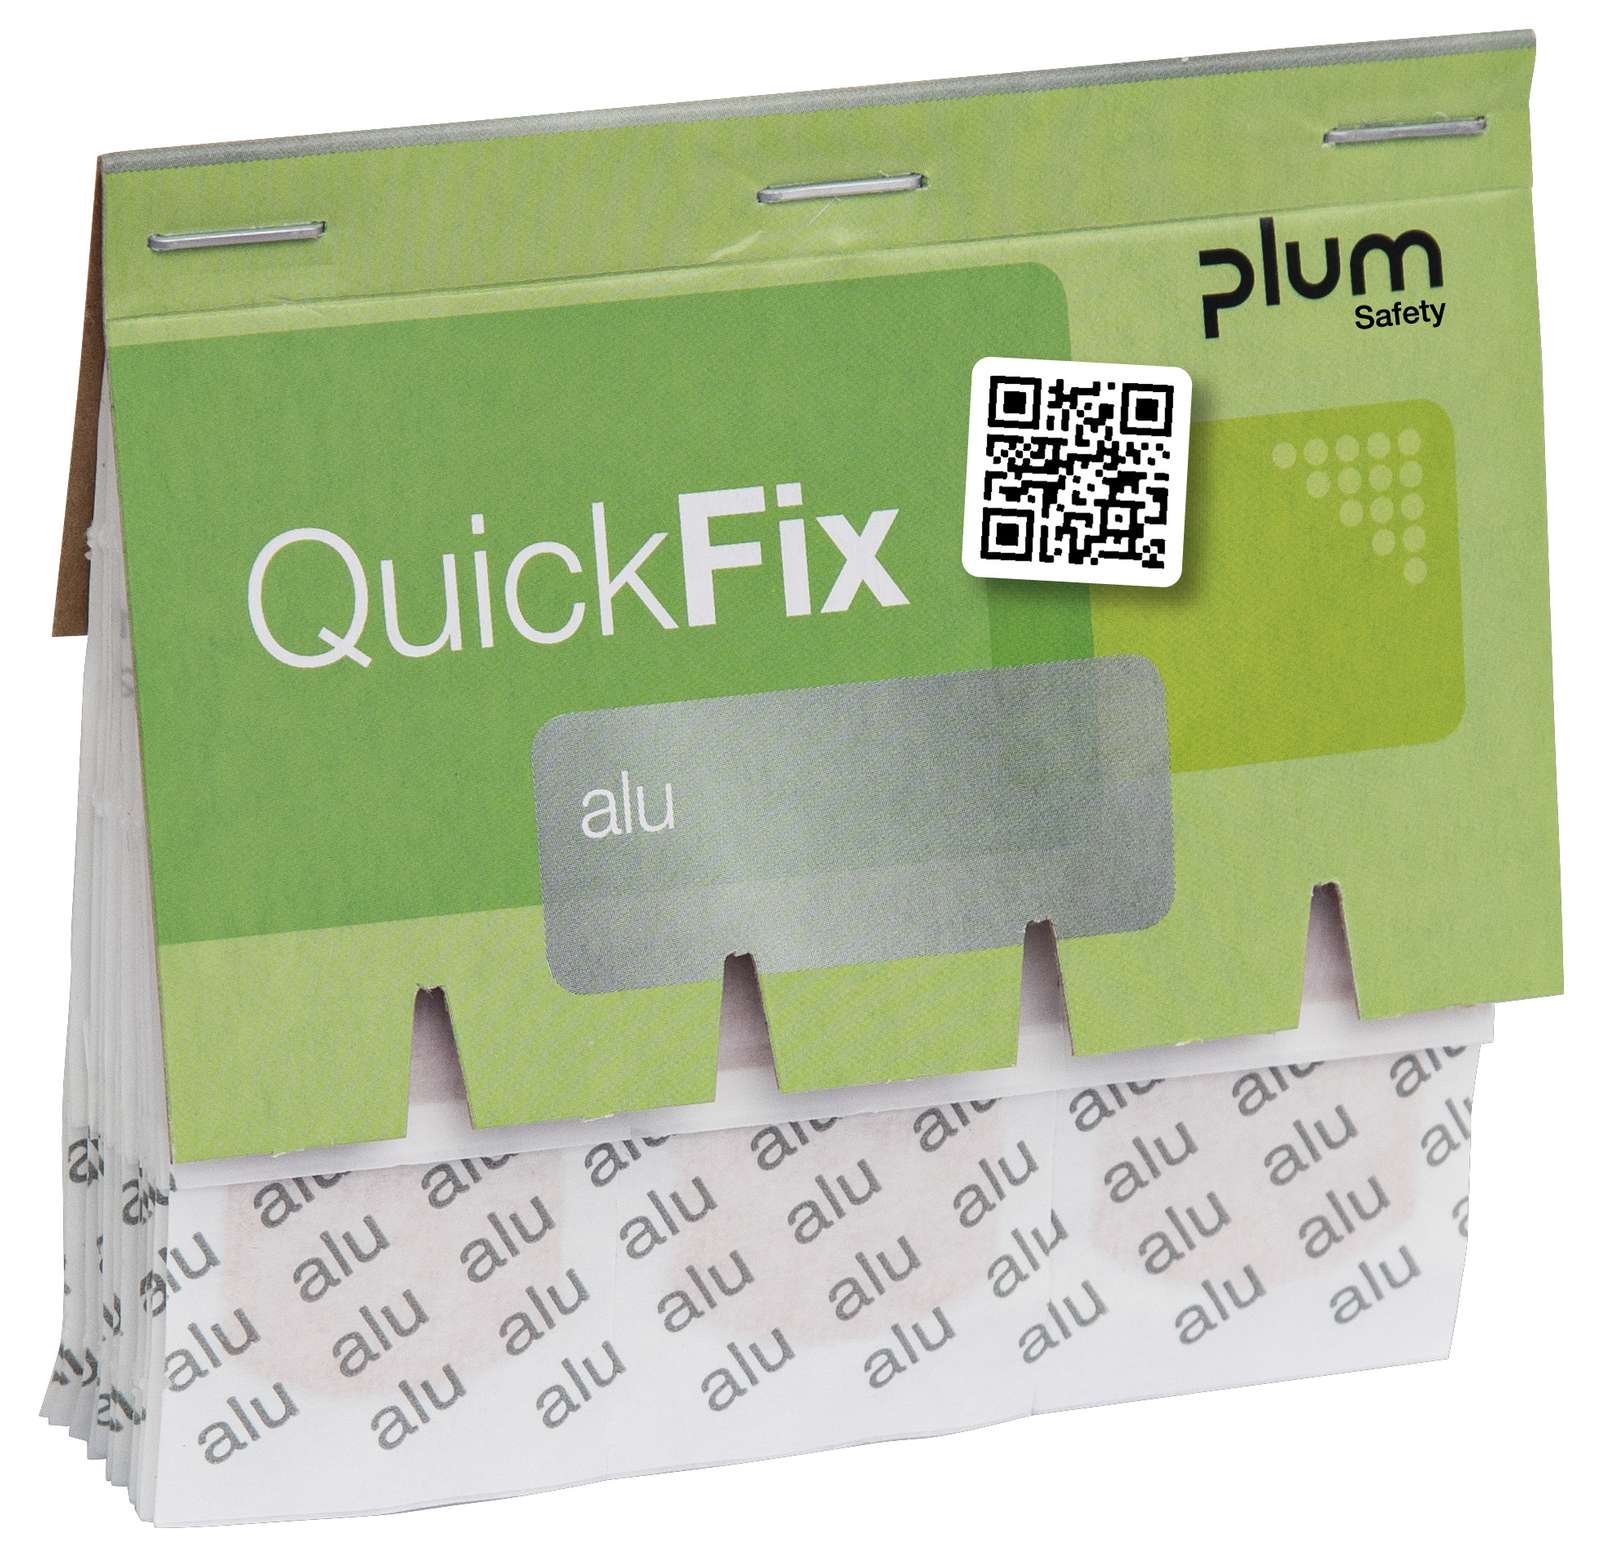 5515 Plum QuickFix Alu Open 20231124